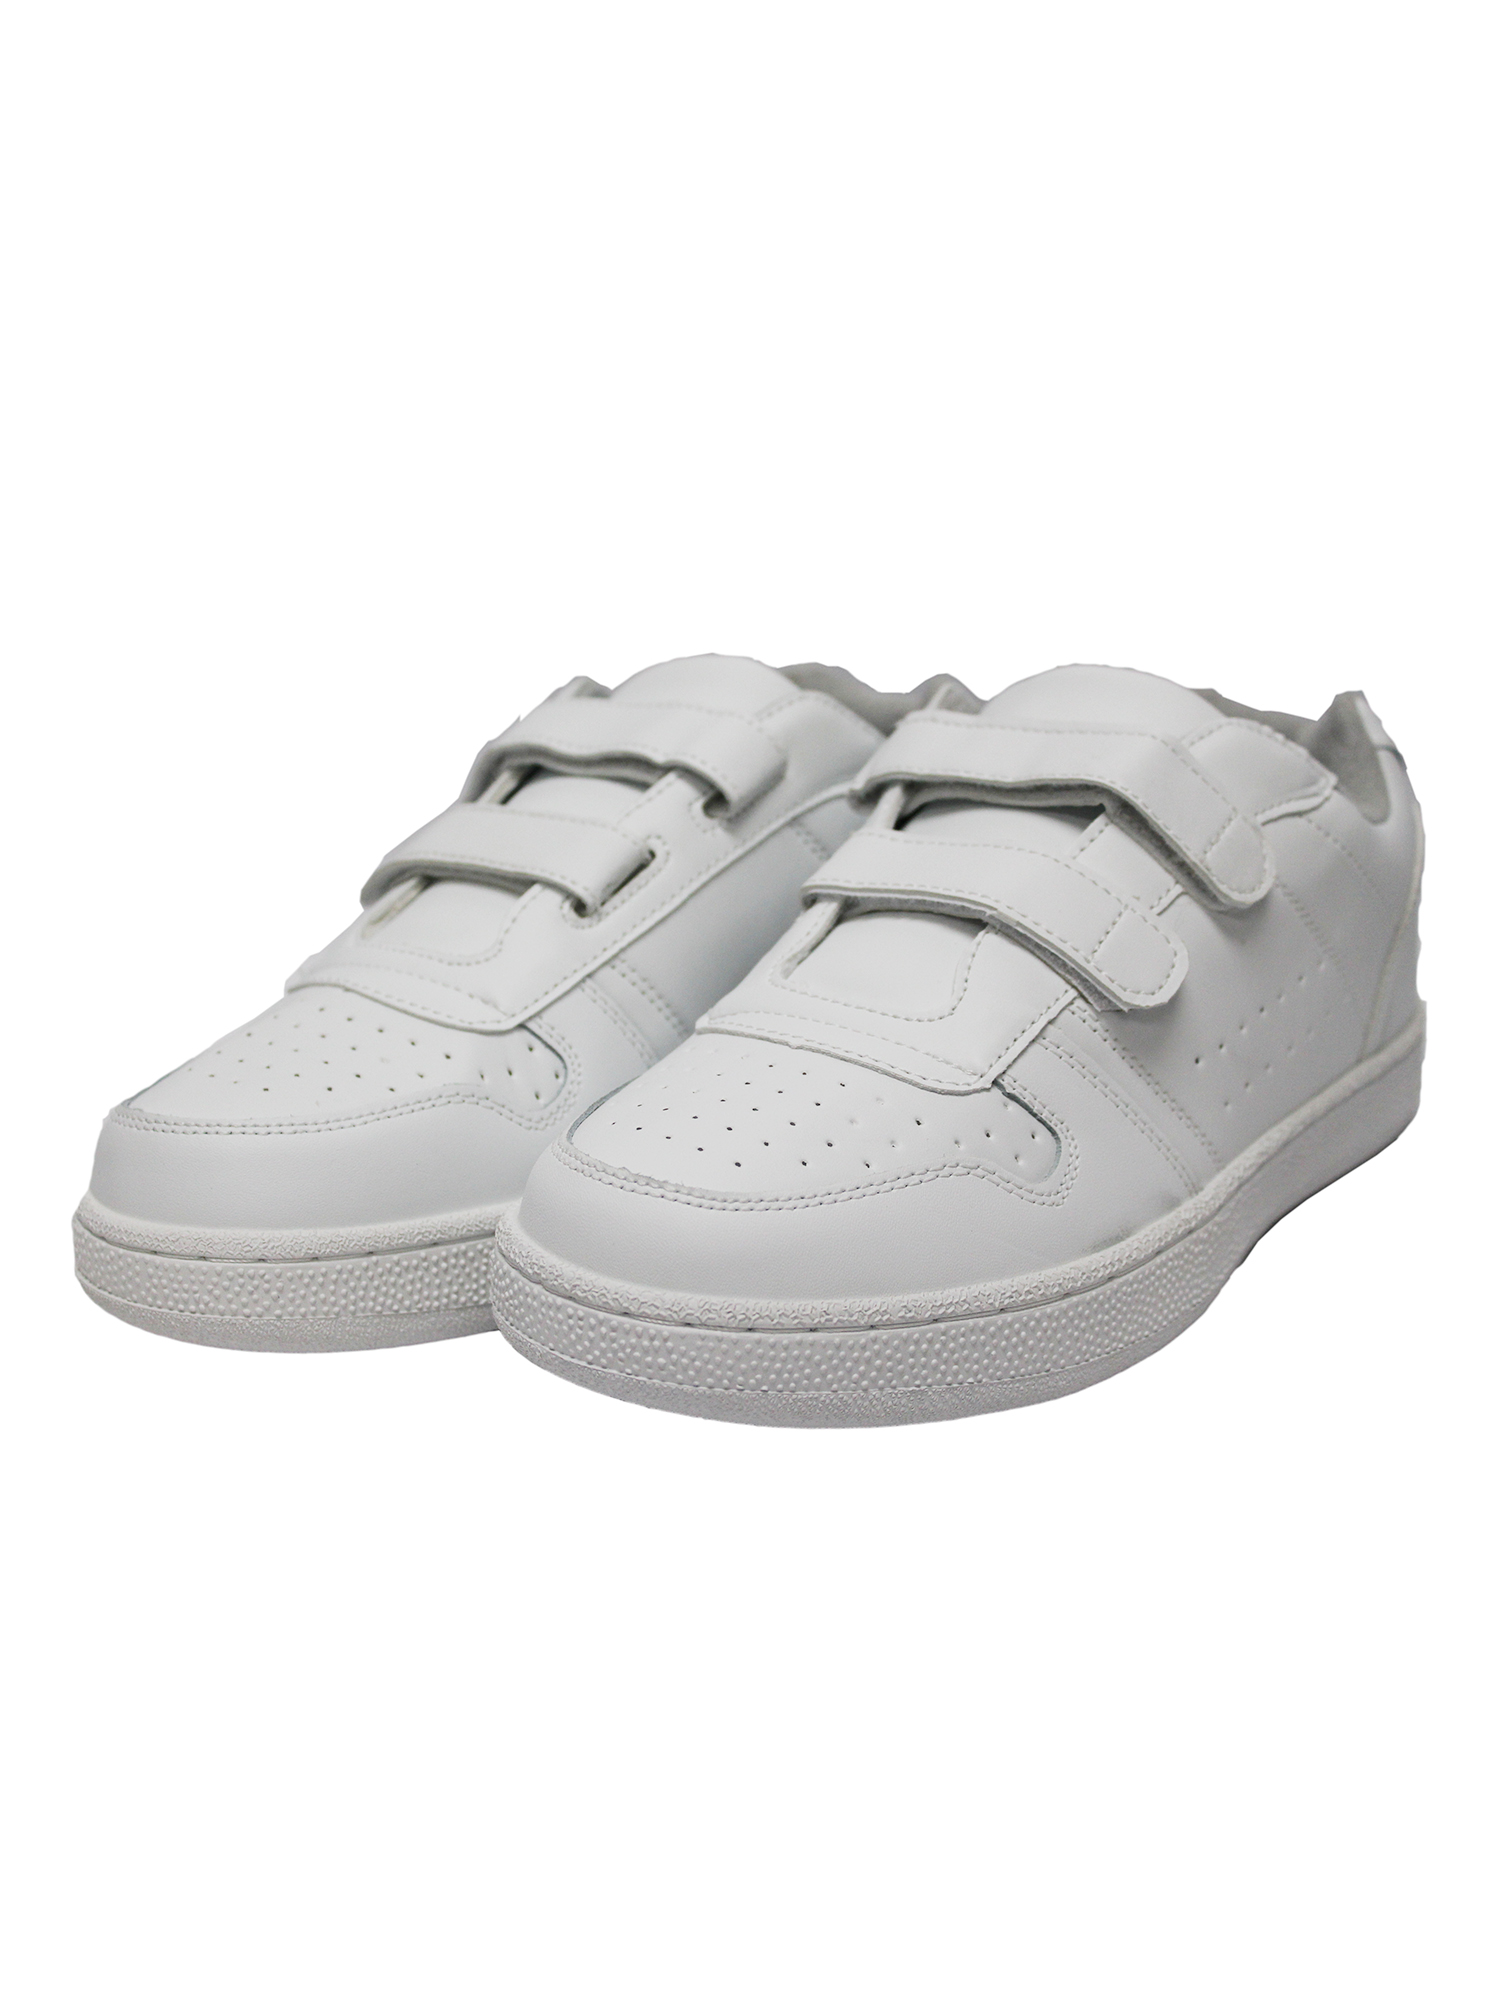 Tanleewa Men's Leather Strap Sneakers Lightweight Hook and Loop Walking Shoe Size 7.5 Adult Male - image 2 of 5